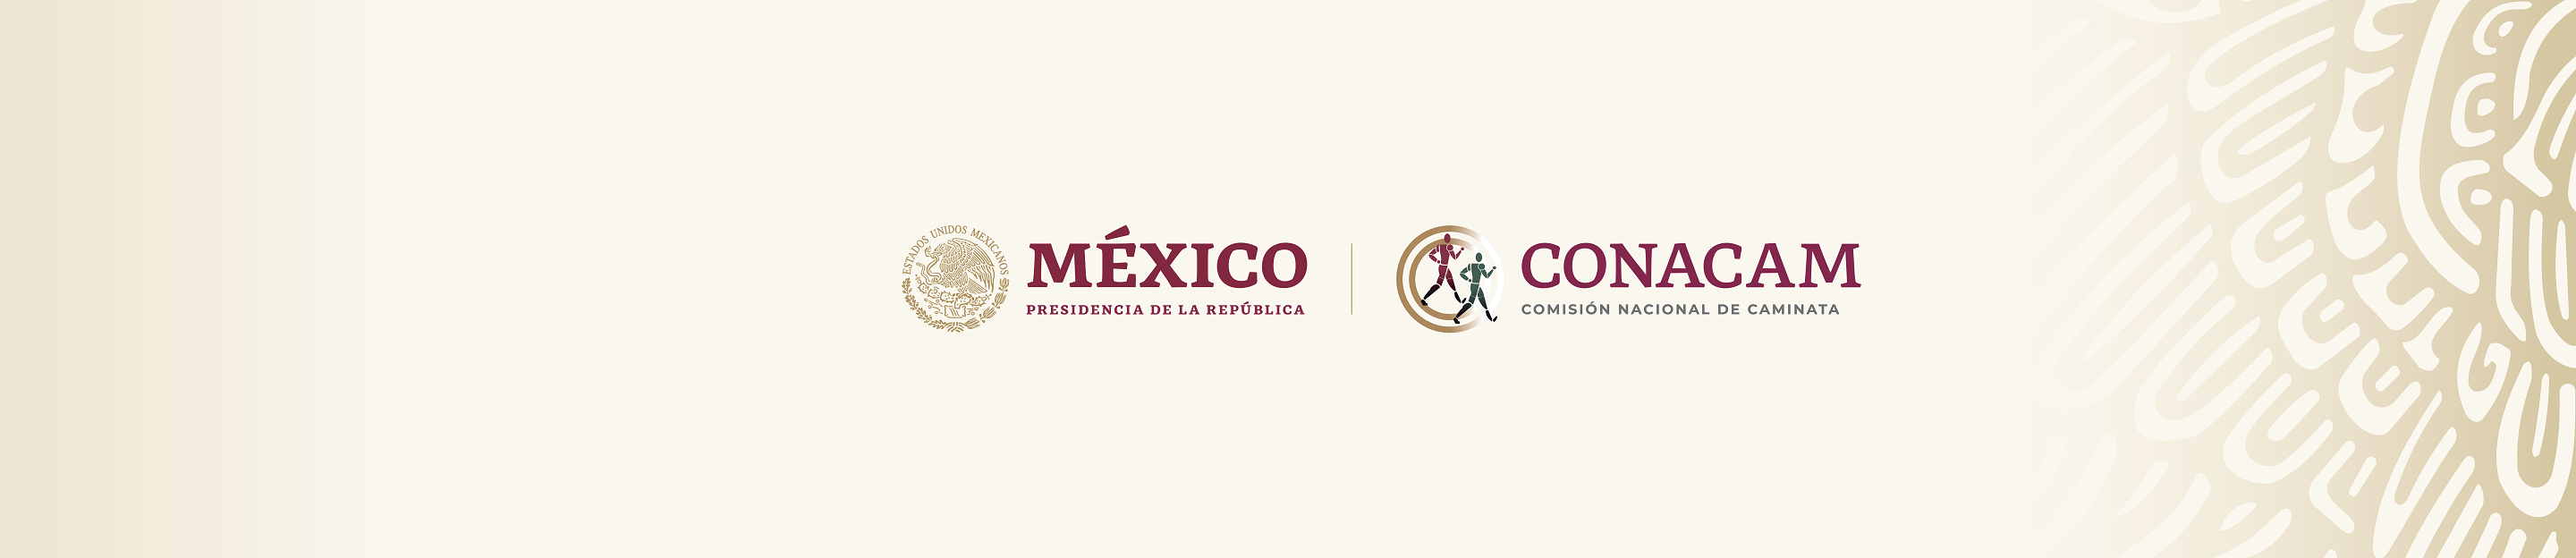 Banner Institucional Gobierno de México - CONACAM